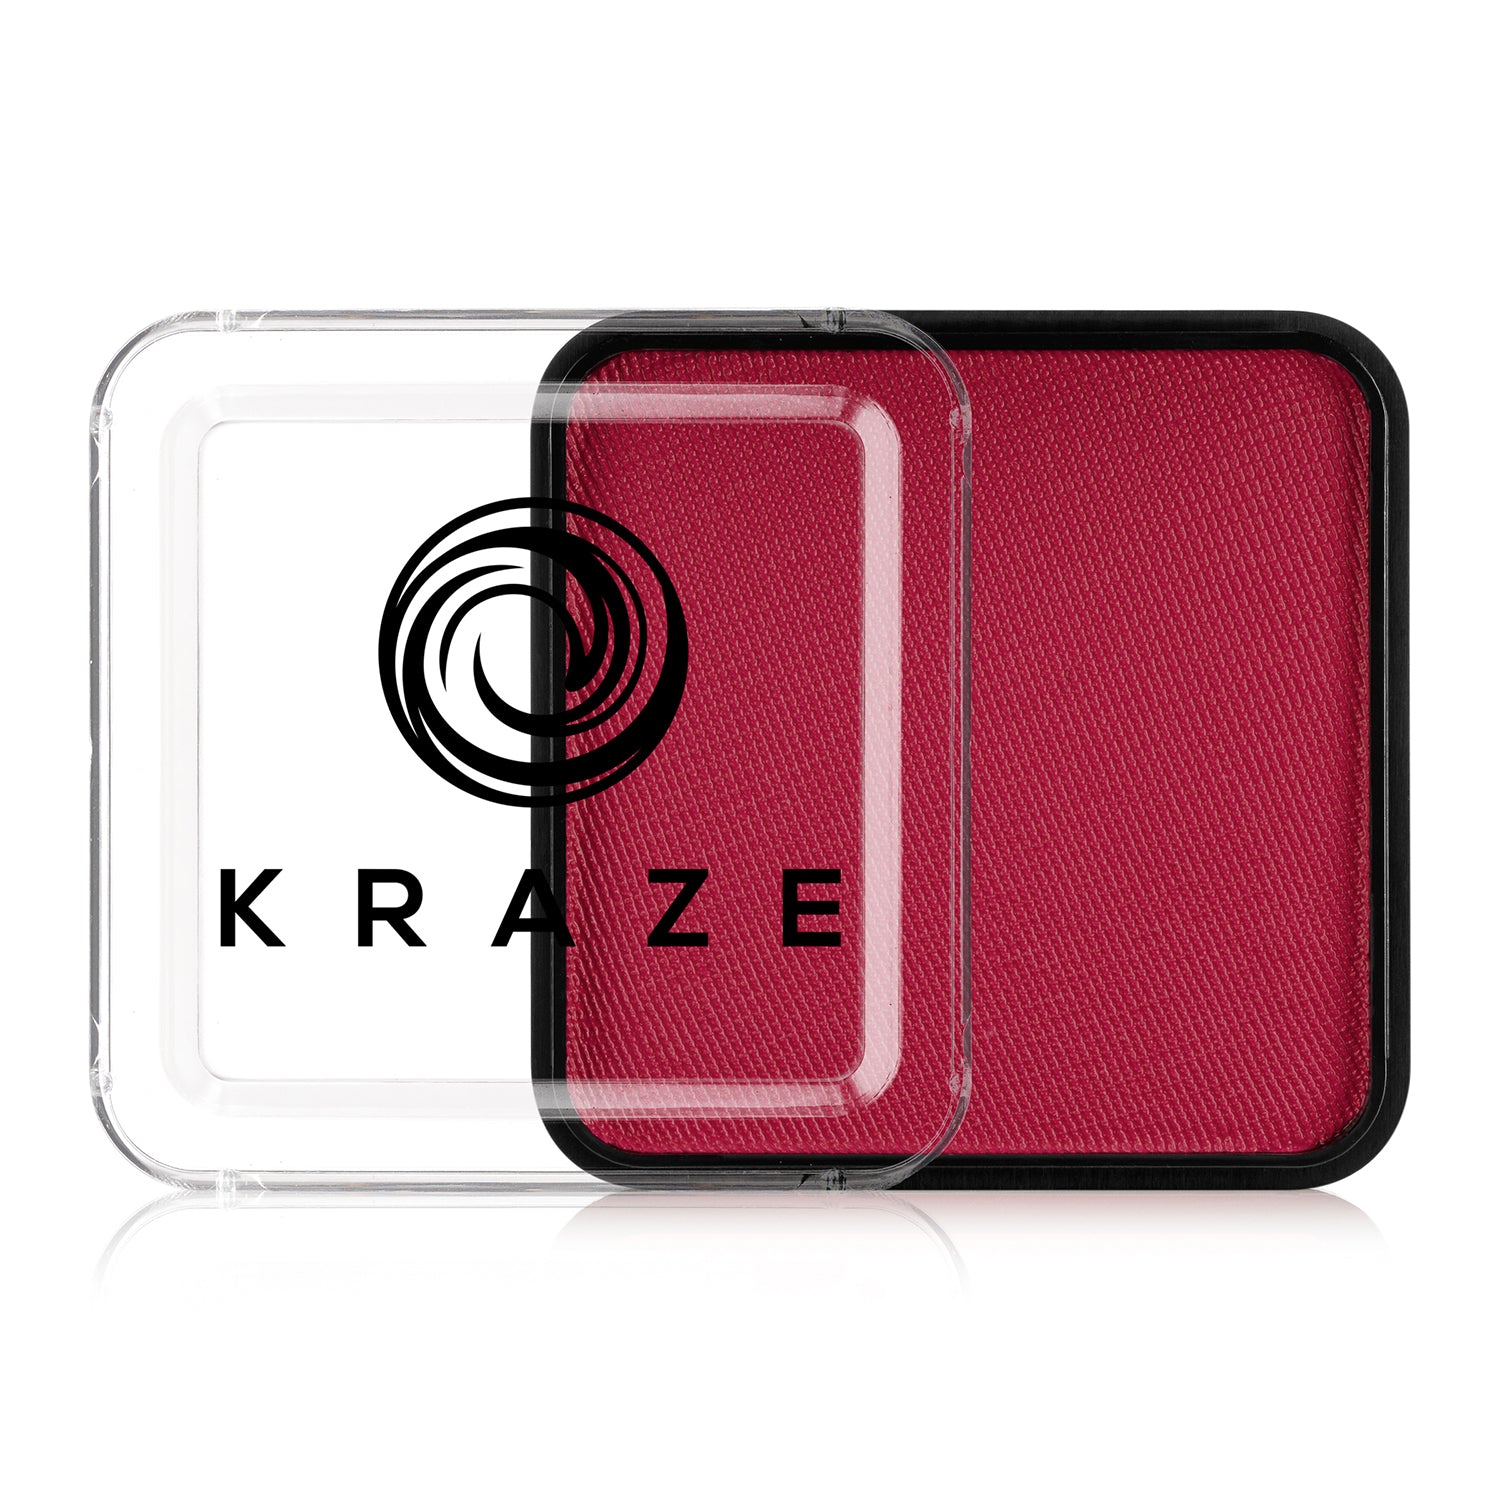 Kraze FX Face Paint - Magenta (25 gm)